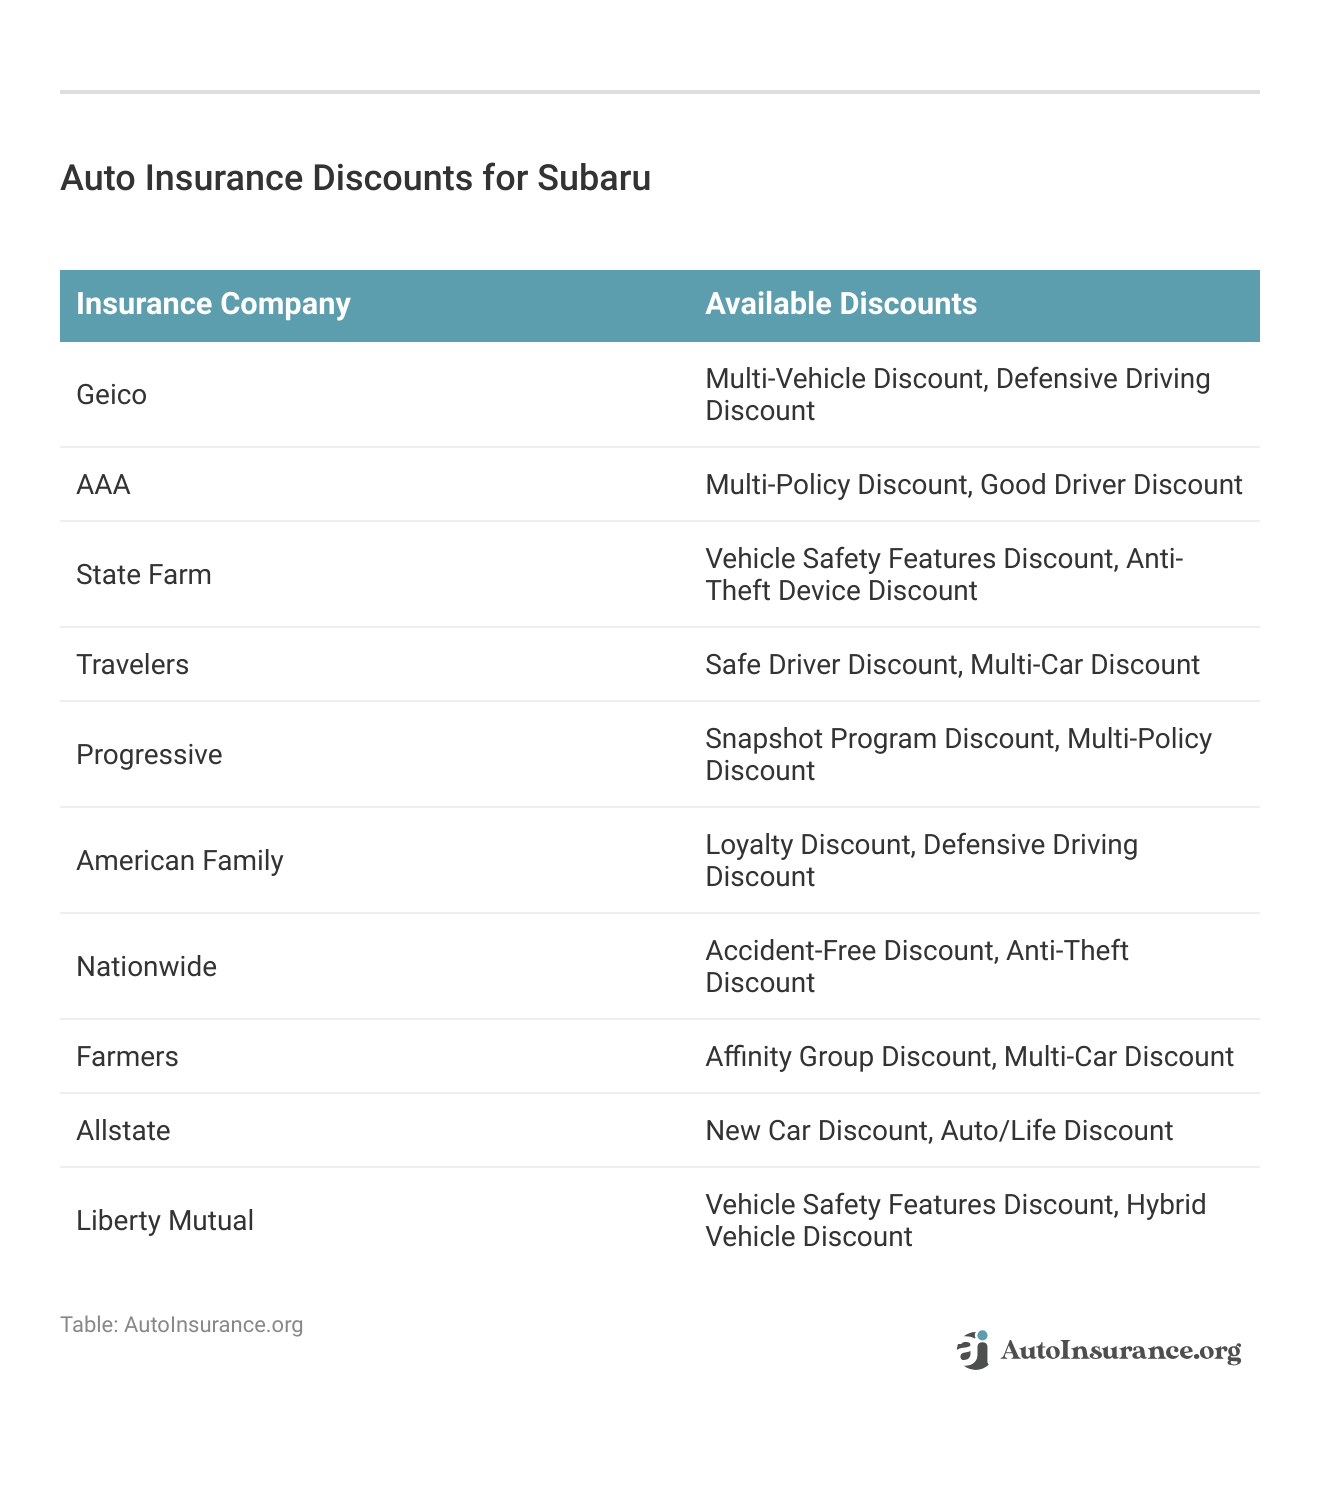 <h3>Auto Insurance Discounts for Subaru</h3>